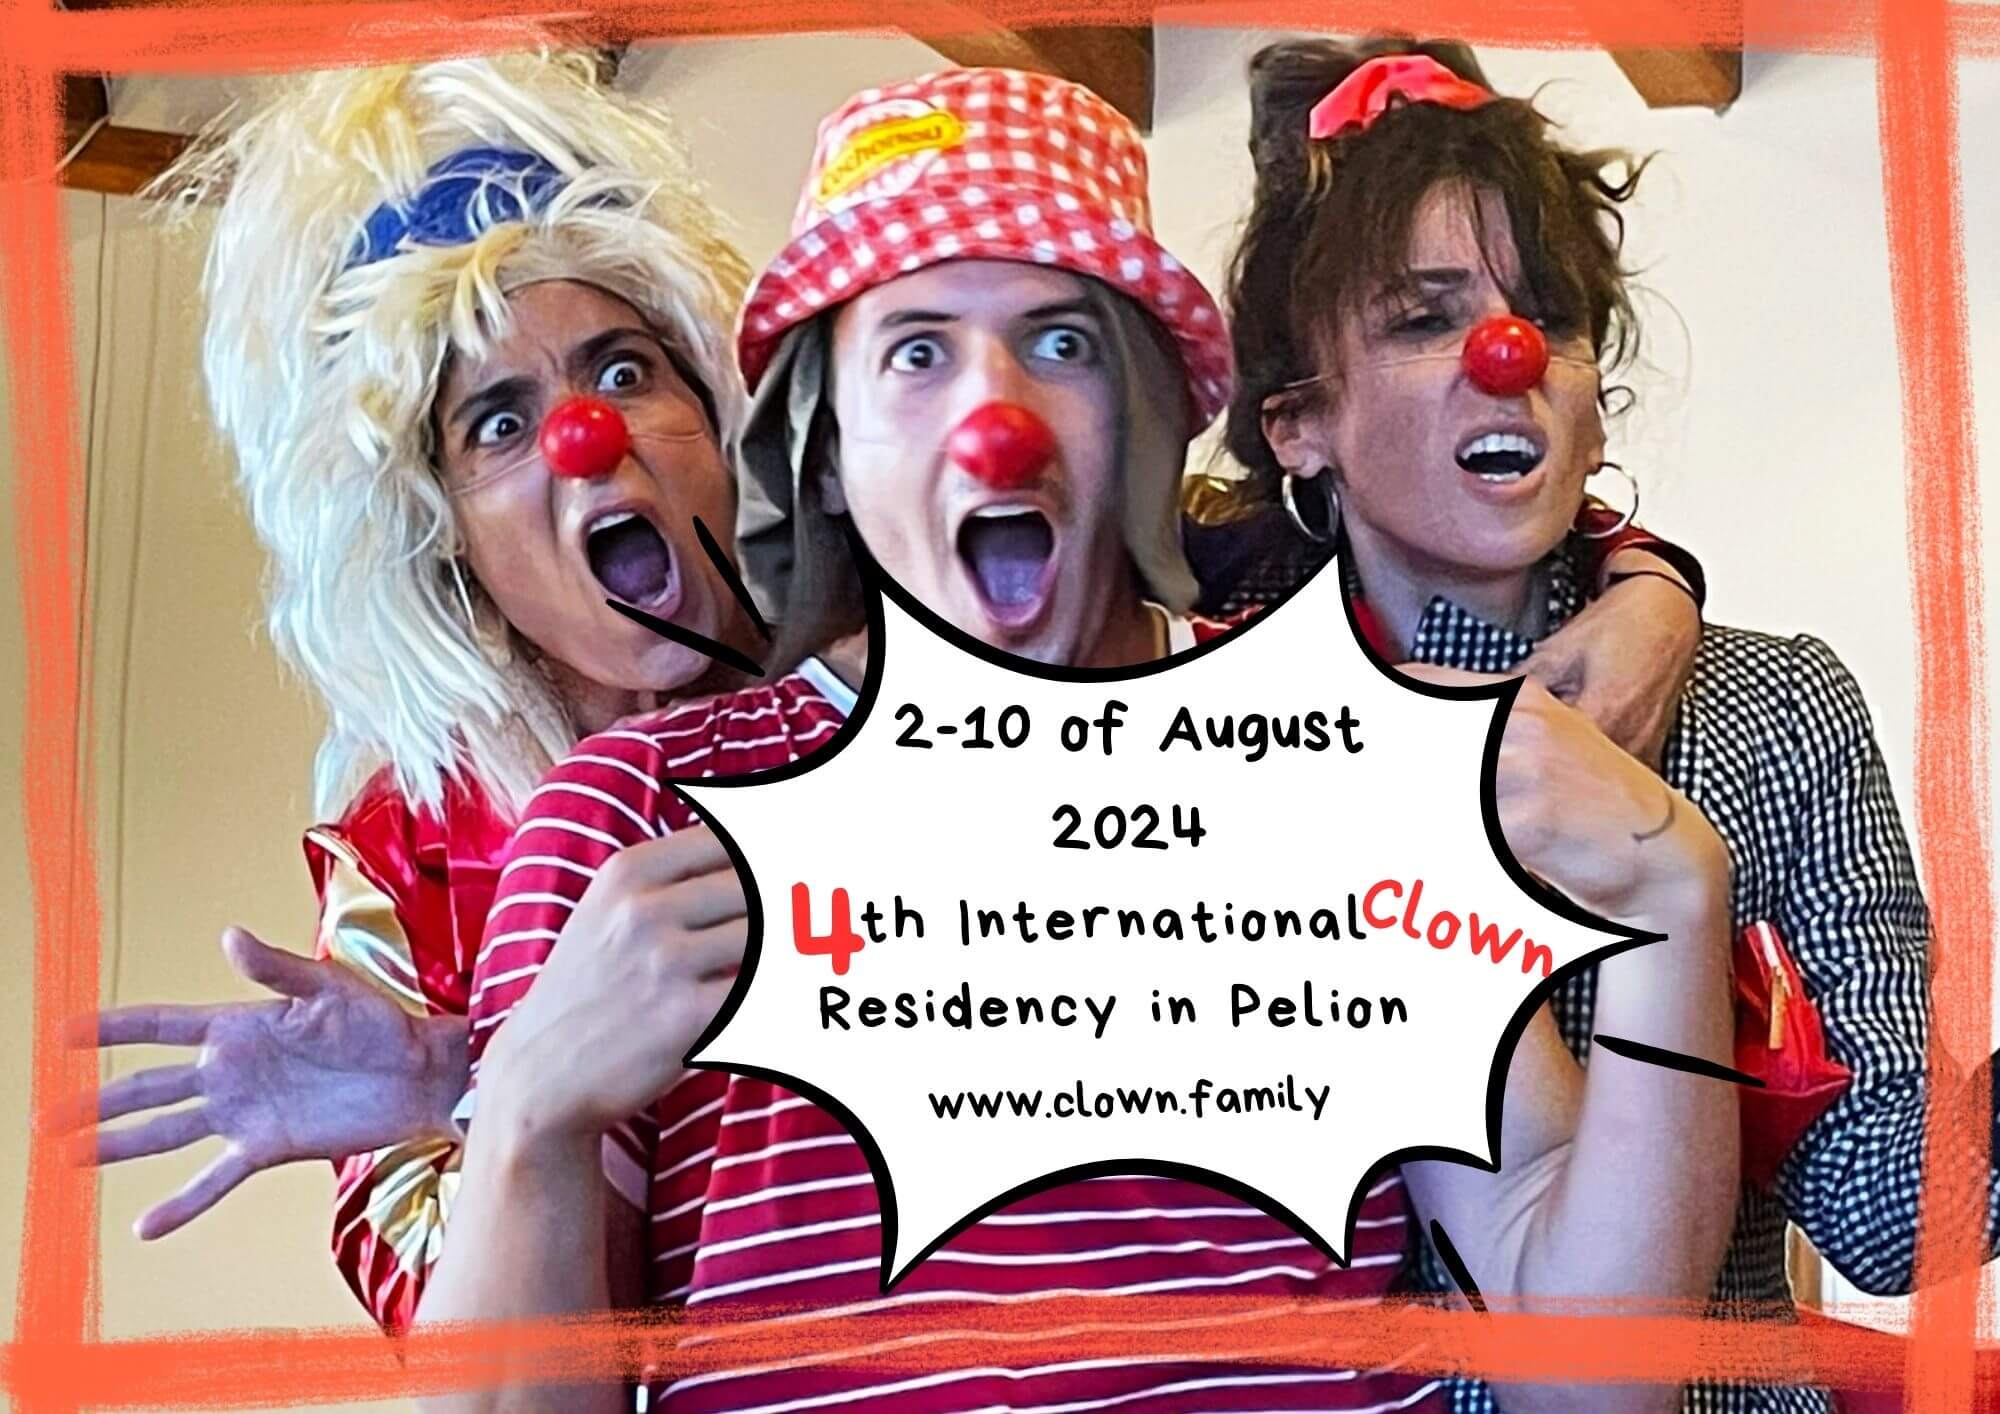 4th international clown residency